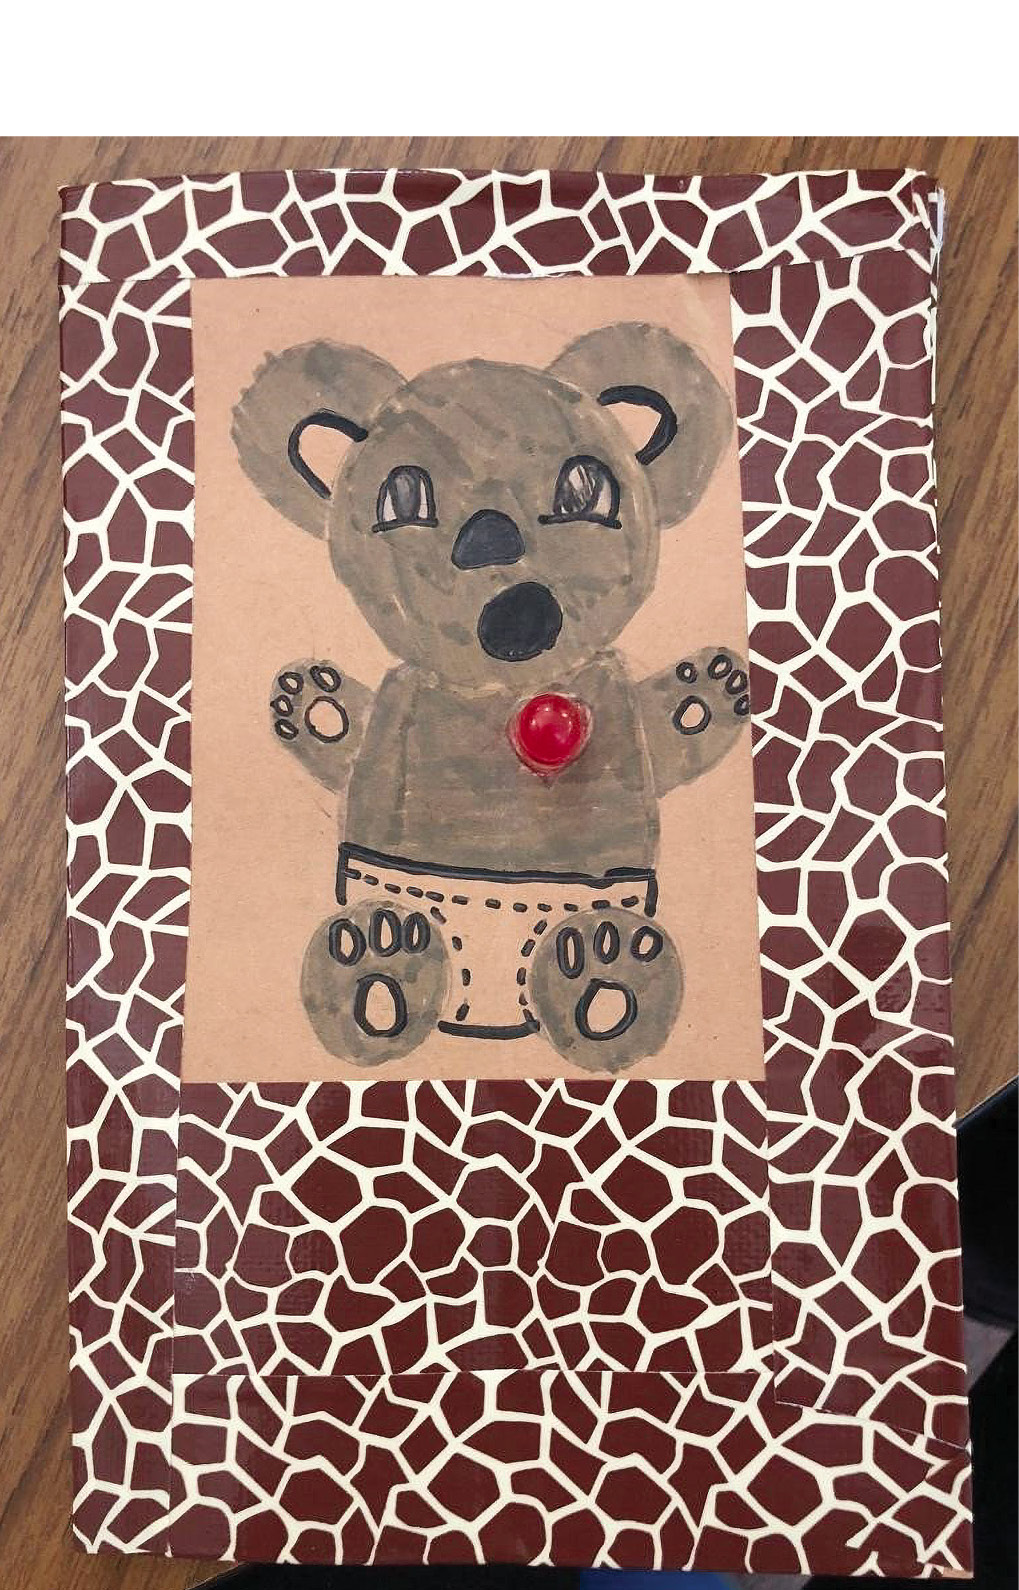 Leo’s waterproof, light-up heart koala bear card to celebrate his baby brother